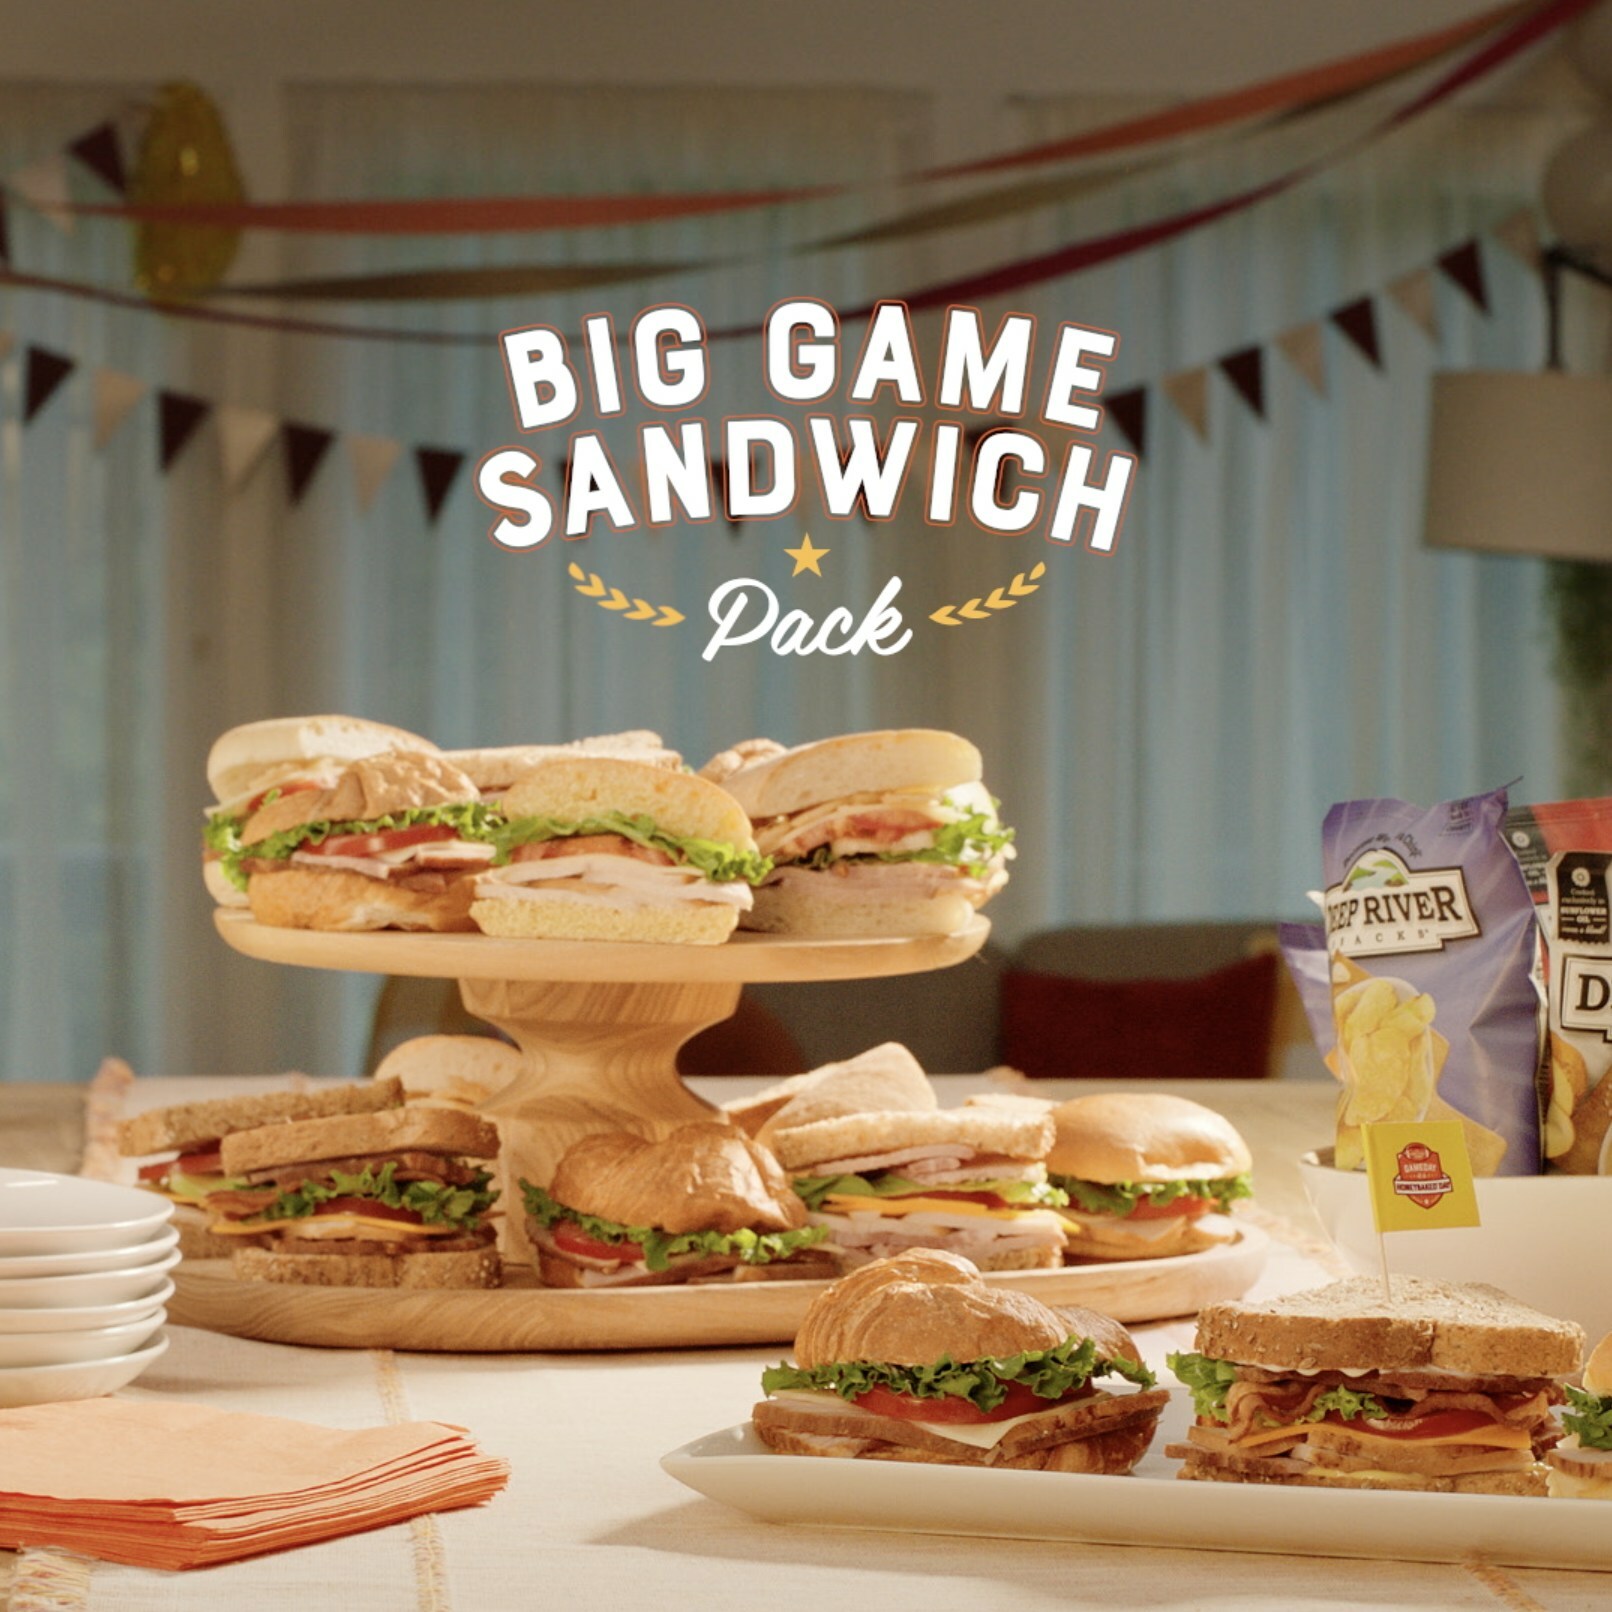 Big Game Sandwich Pack